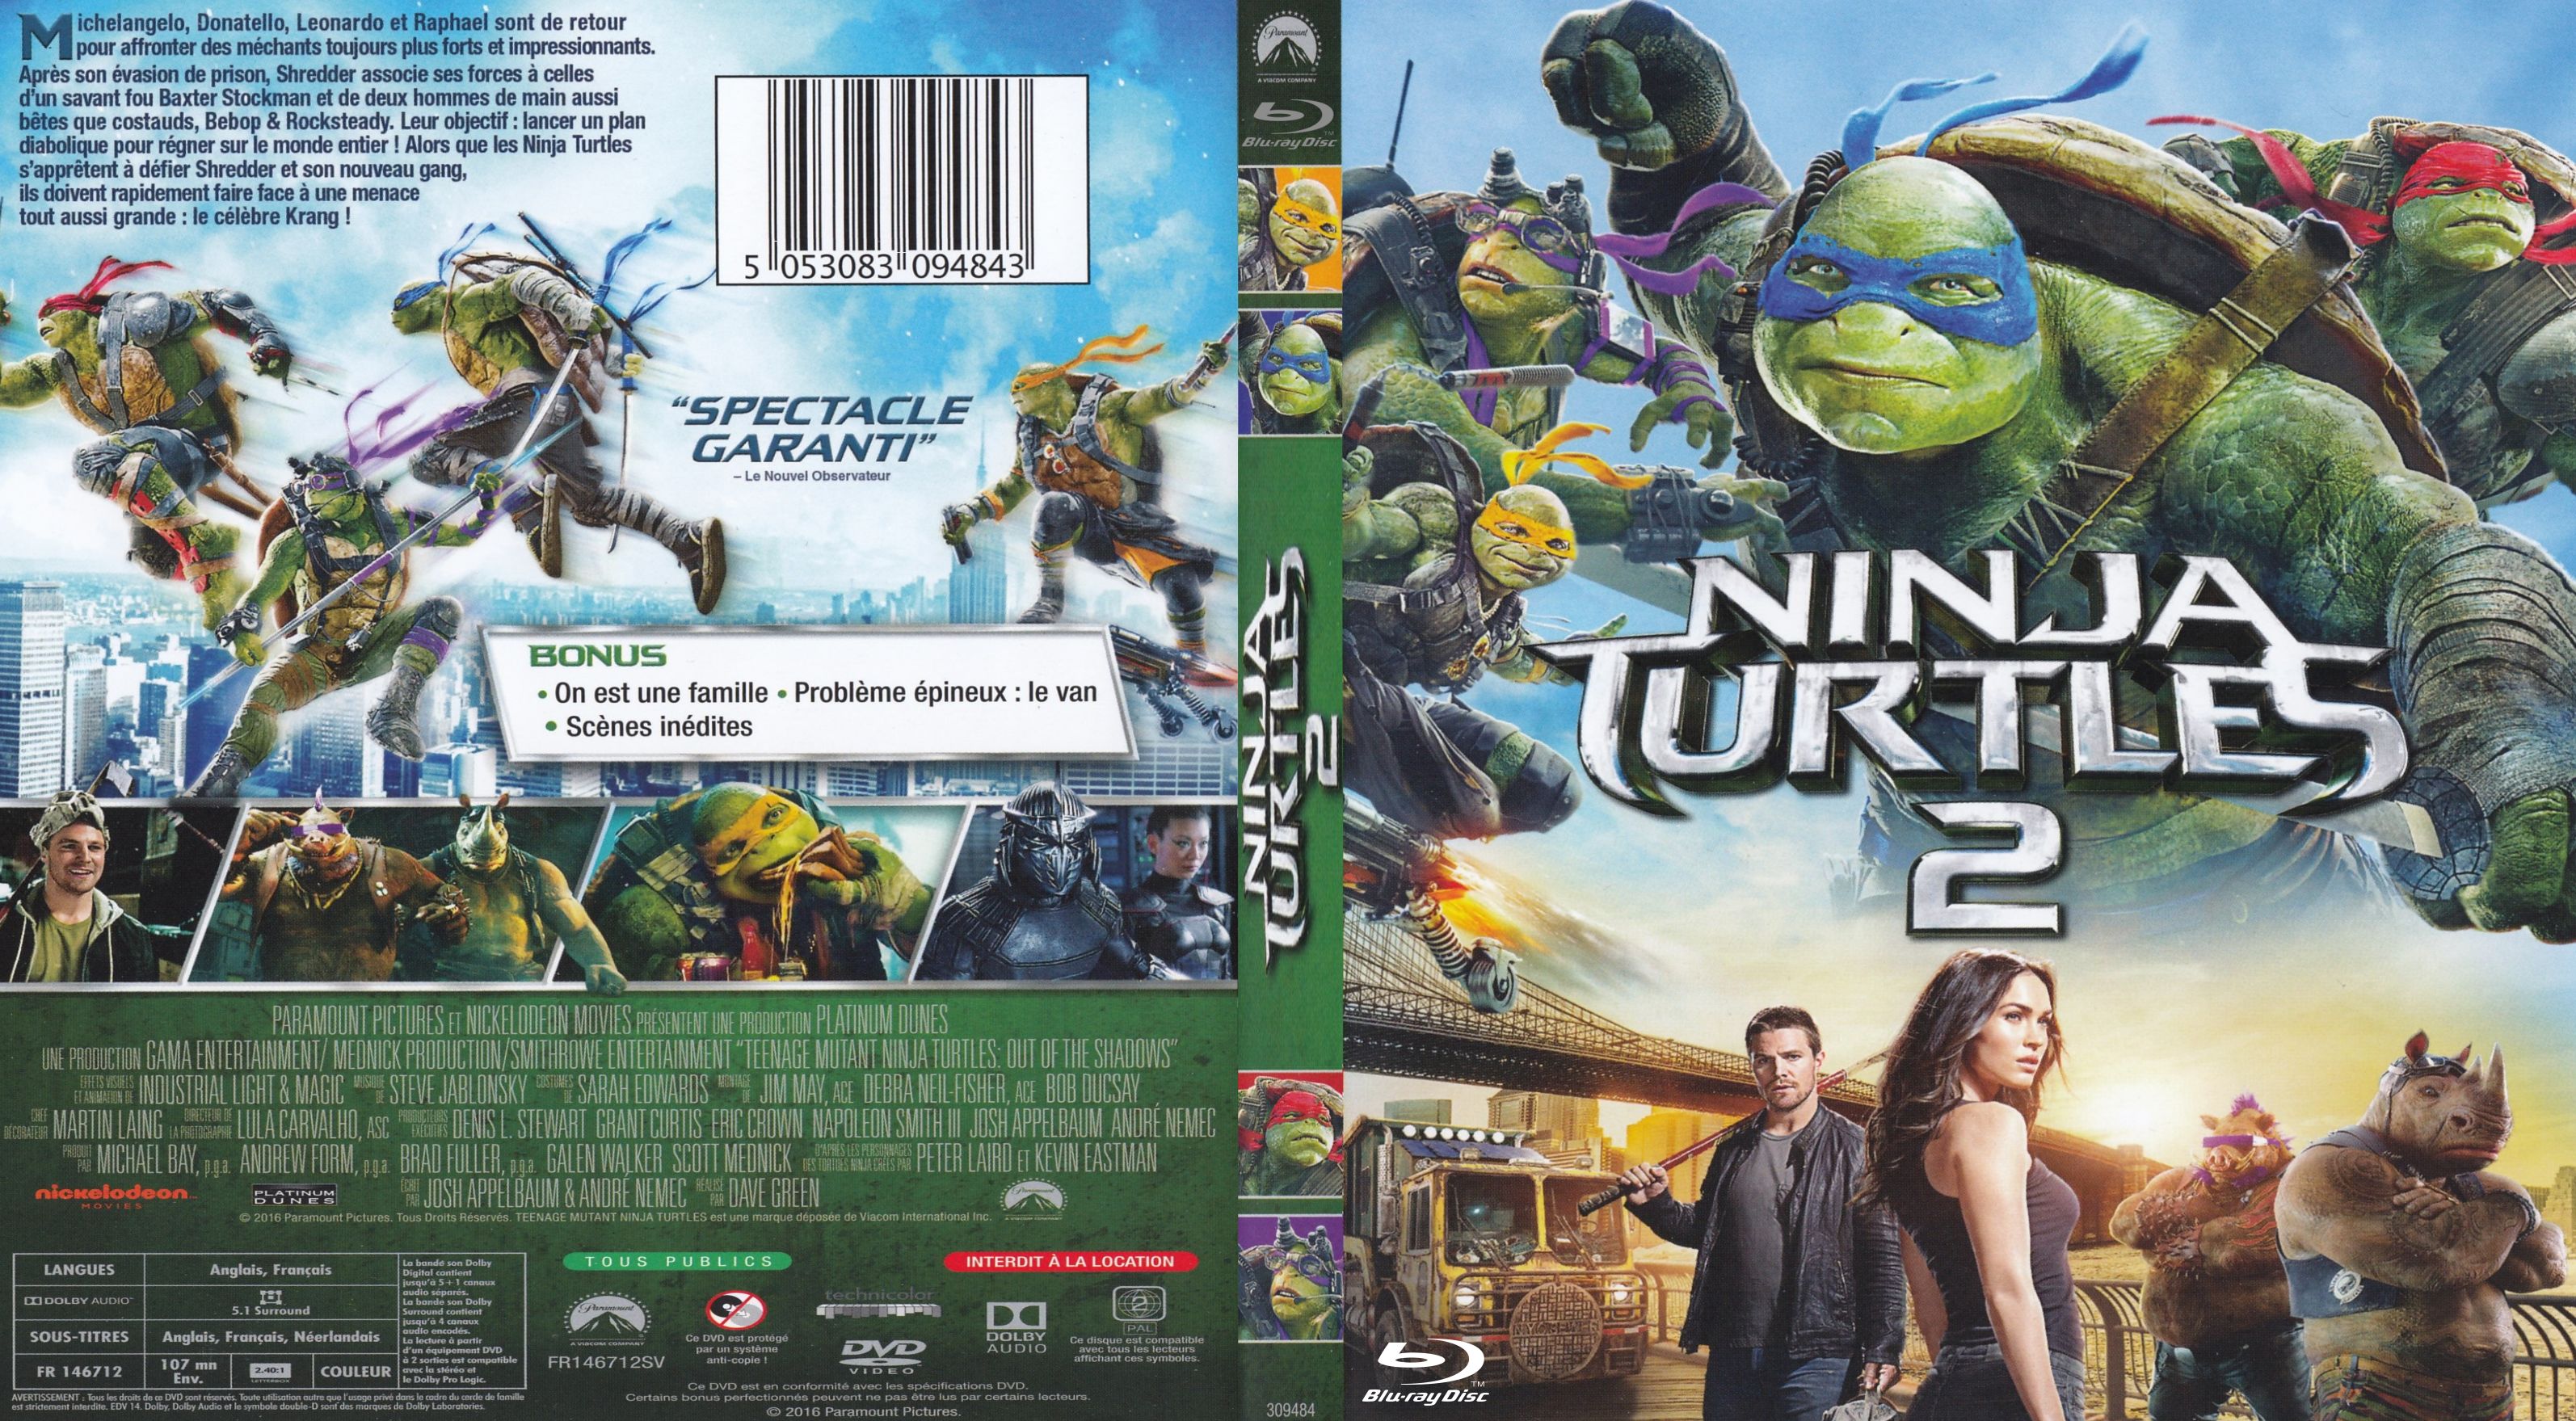 Jaquette DVD Ninja Turtles 2 (BLU-RAY)